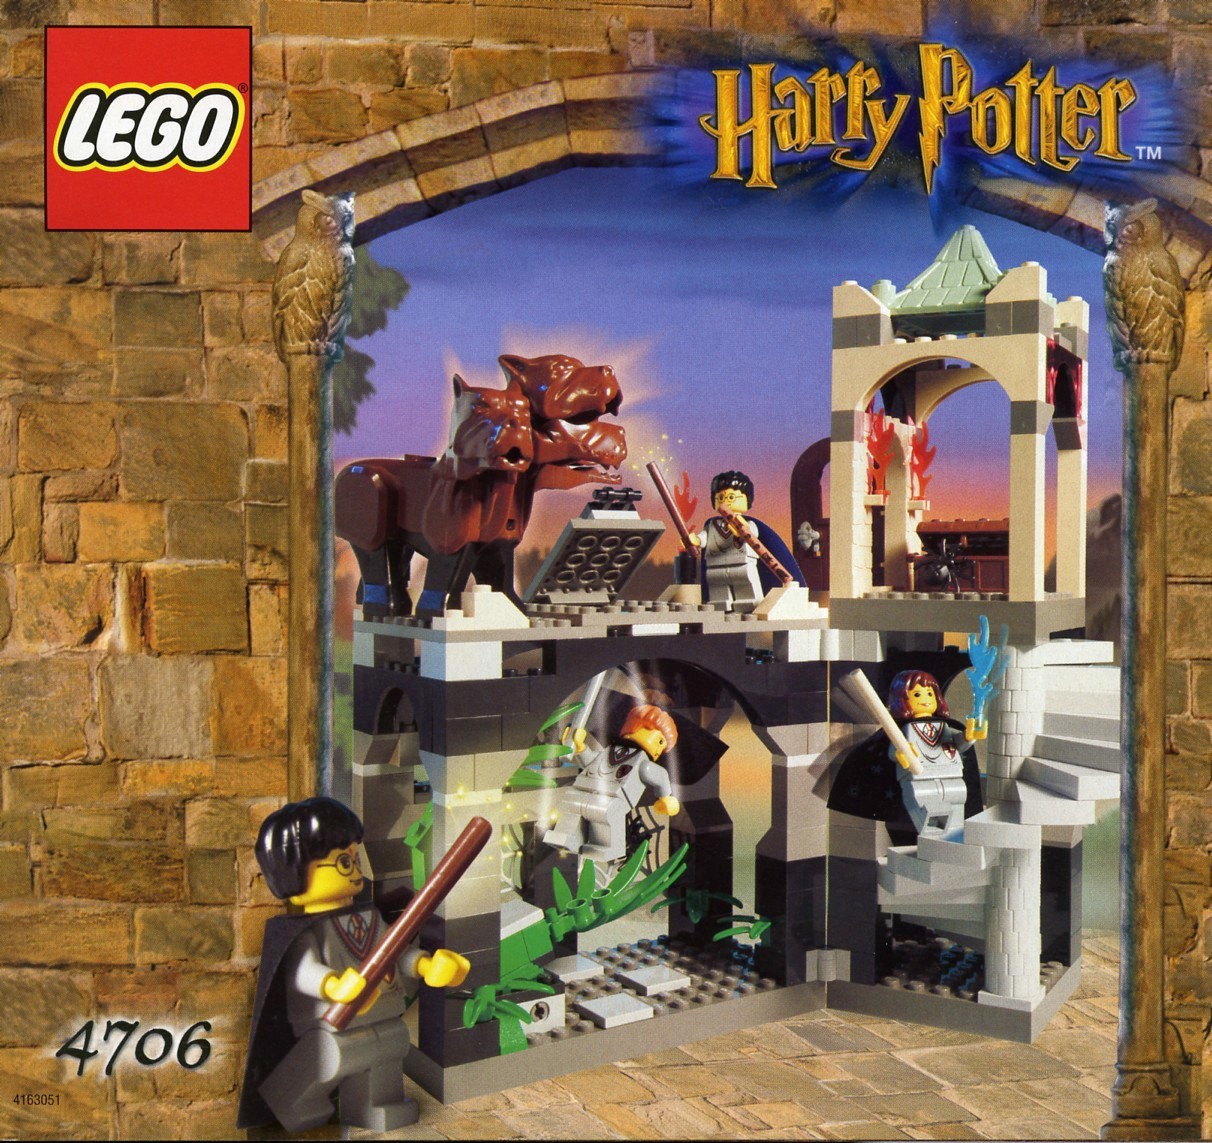 Lego Harry Potter Collection Codigo 25 Digitos